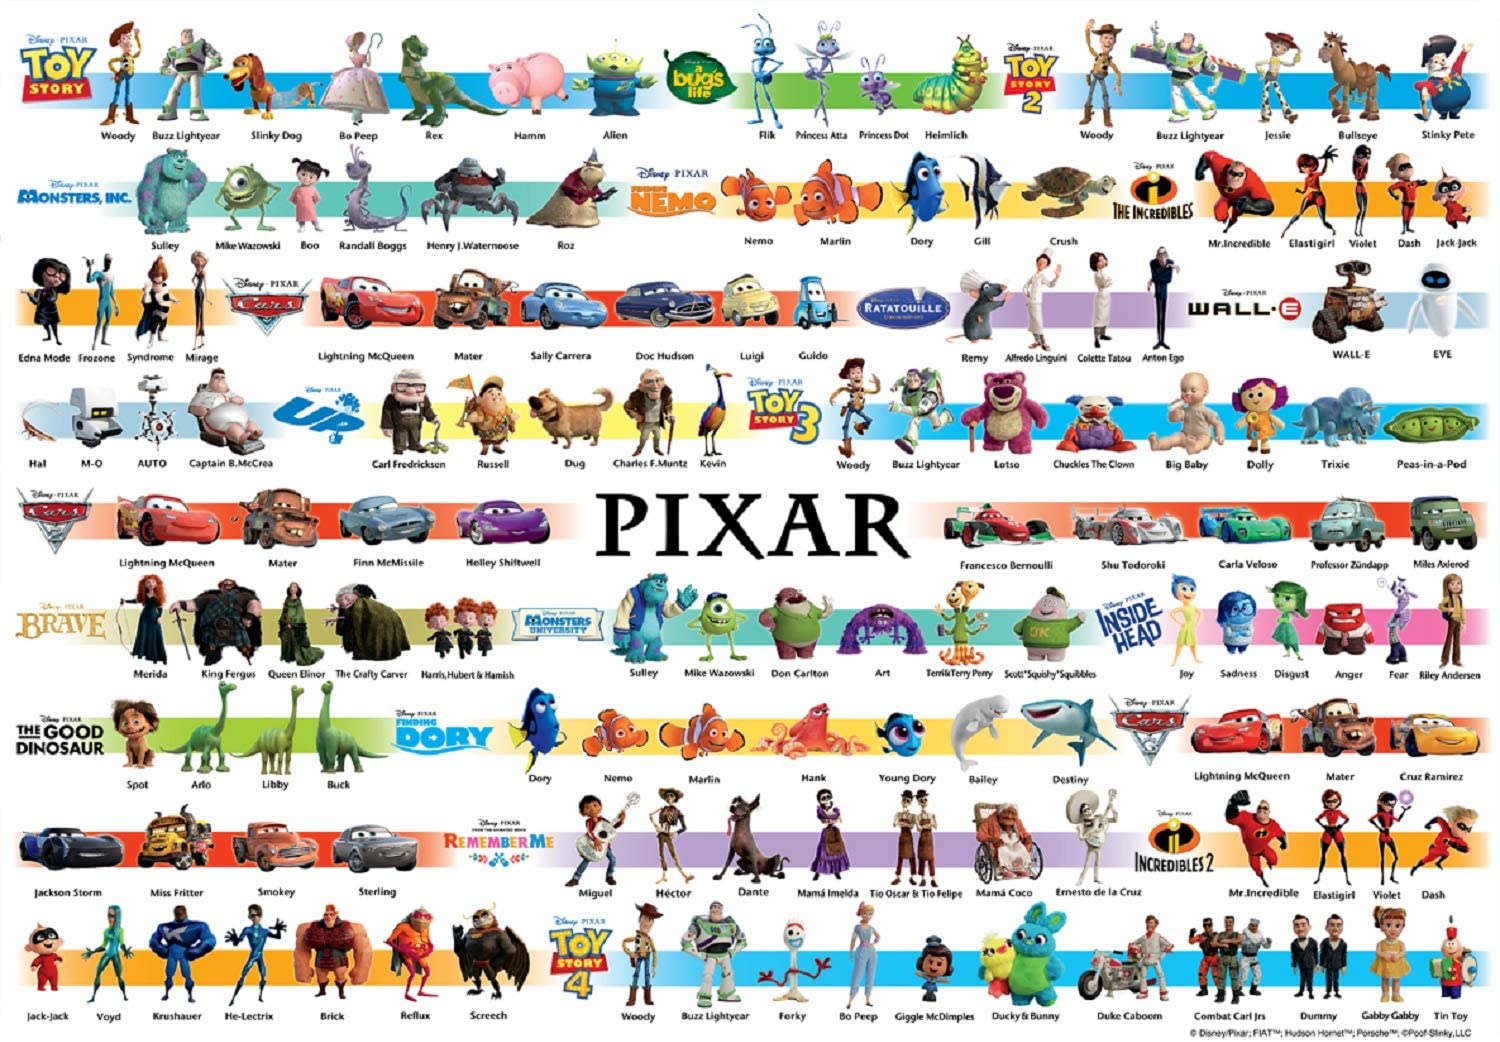 Pixar collection. Дисней Пиксар коллекшн. Сборник Пиксар. Плакаты Дисней Пиксар. Коллекция Pixar том DVD.